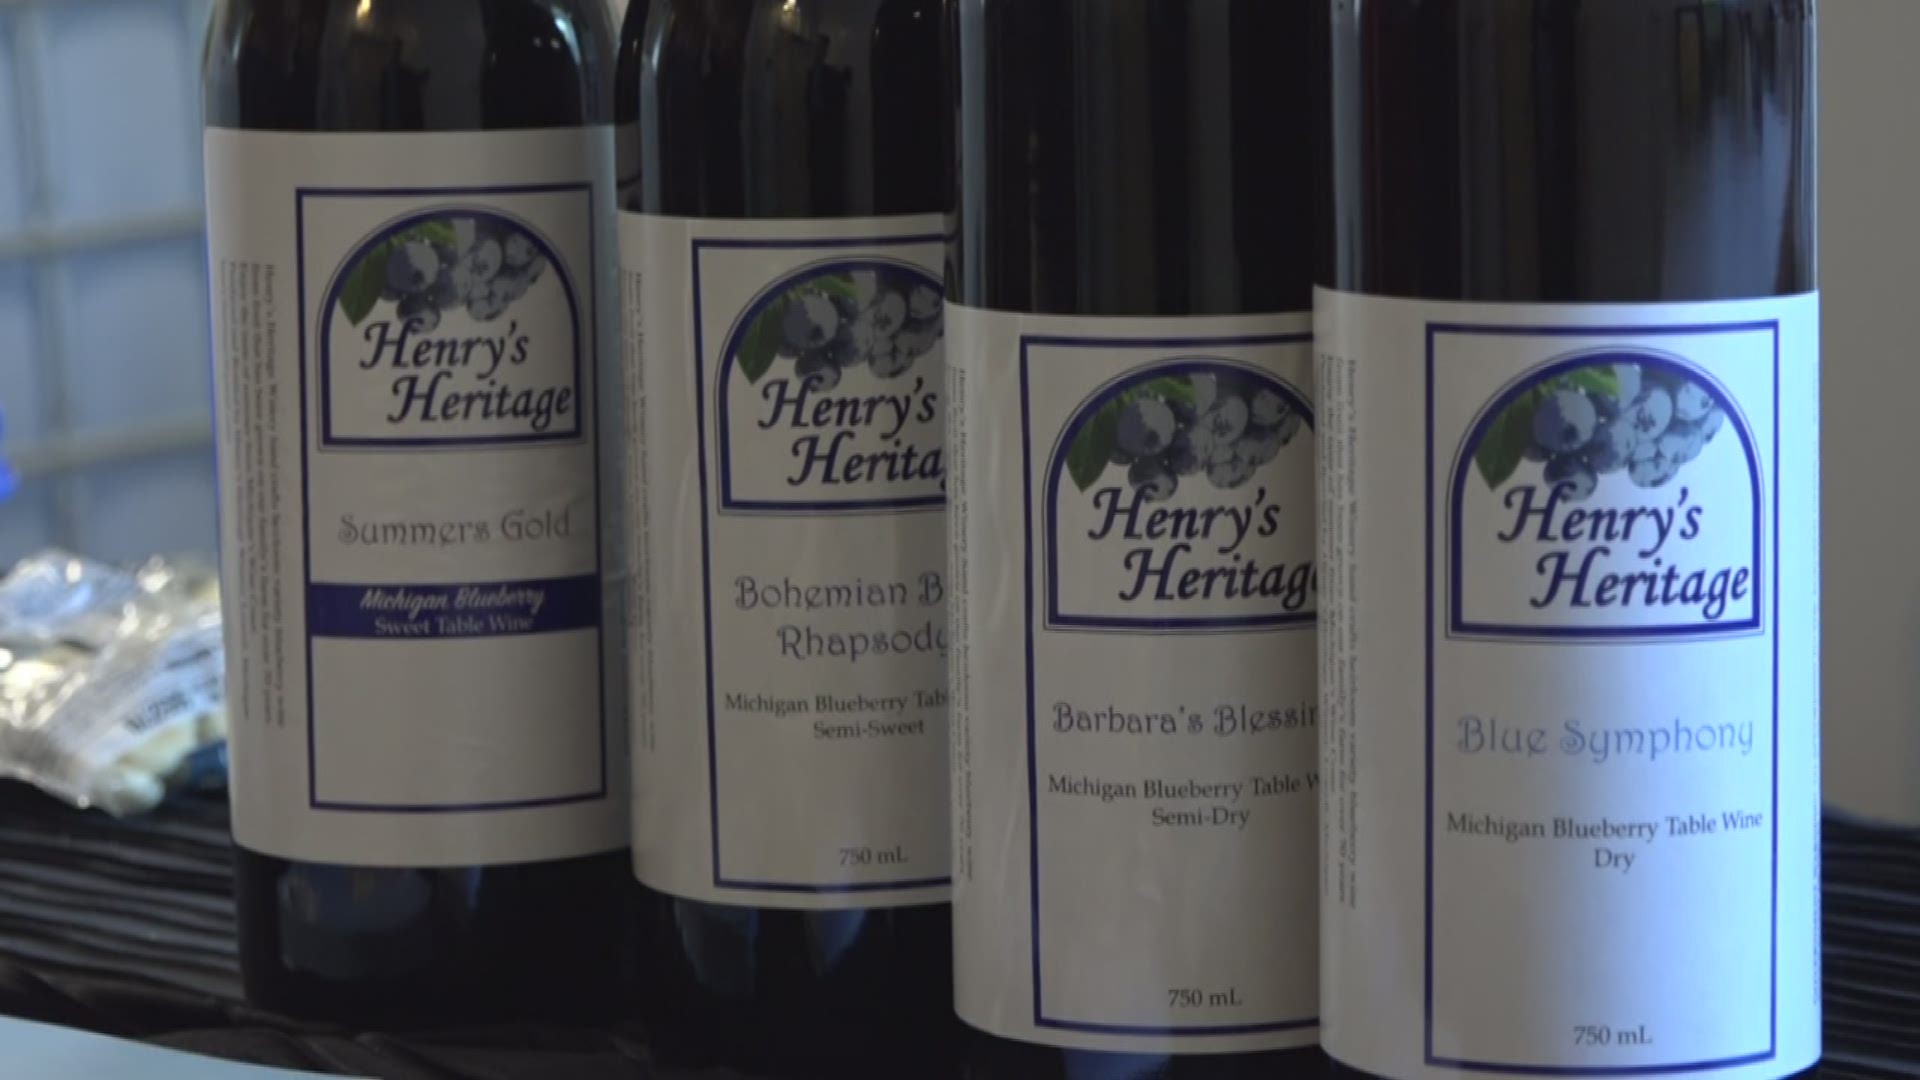 Made in Michigan: Blueberry Wine